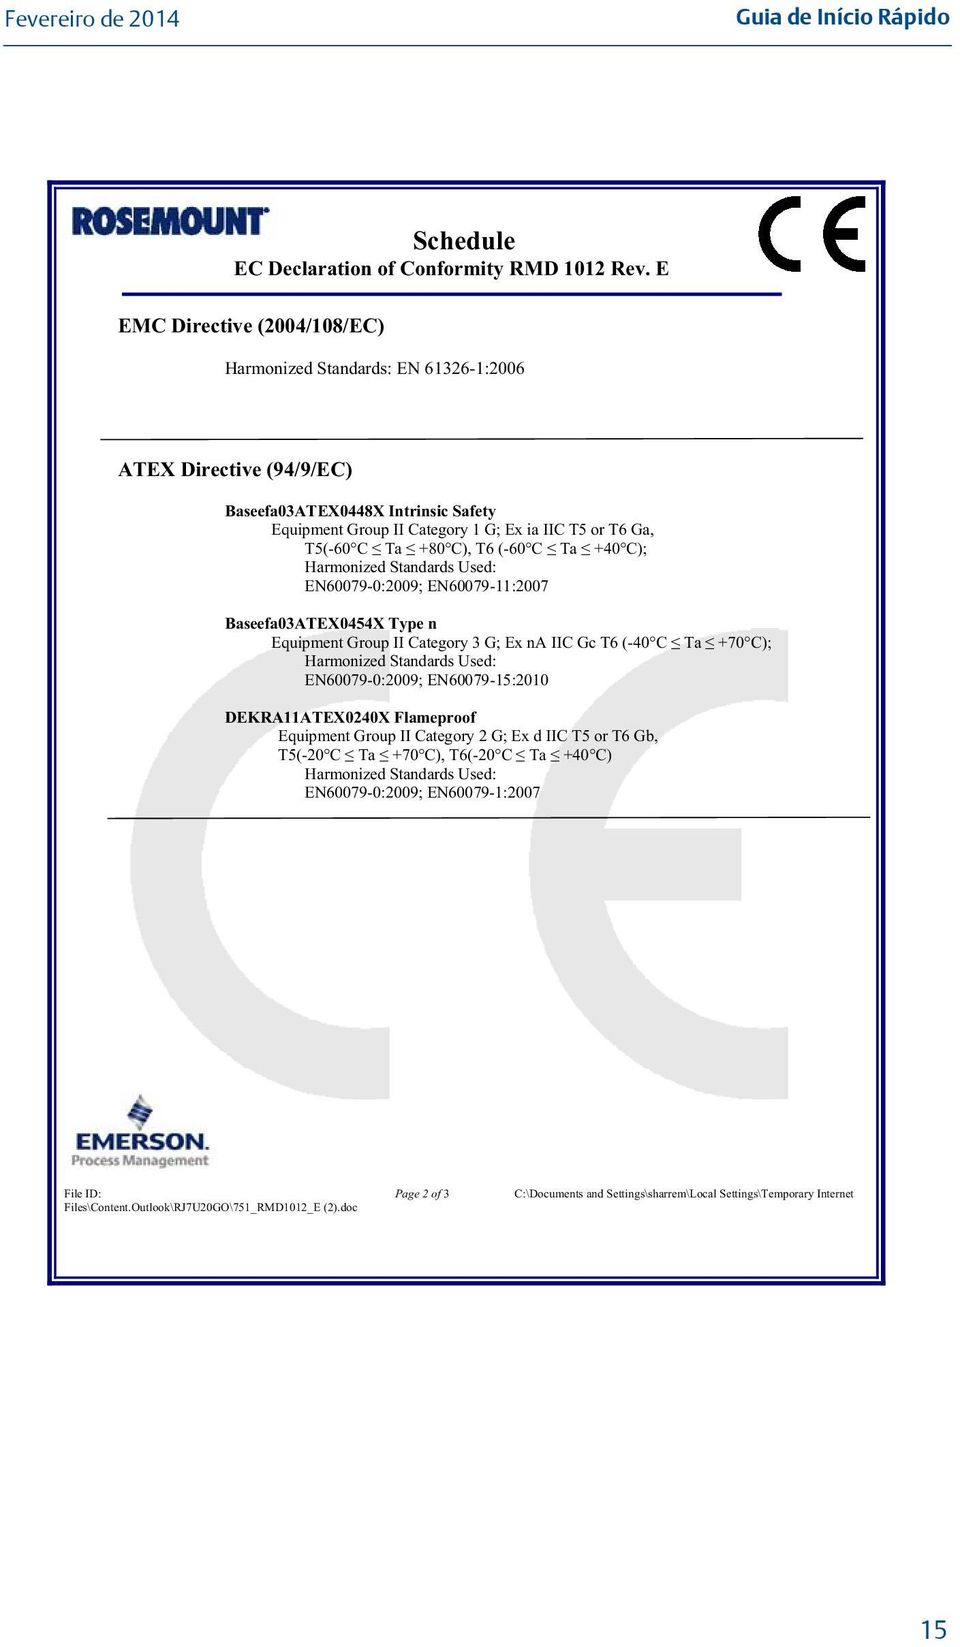 C), T6 (-60 C Ta 40 C); Harmonized Standards Used: EN60079-0:2009; EN60079-11:2007 Baseefa03ATEX0454X Type n Equipment Group II Category 3 G; Ex na IIC Gc T6 (-40 C Ta 70 C); Harmonized Standards